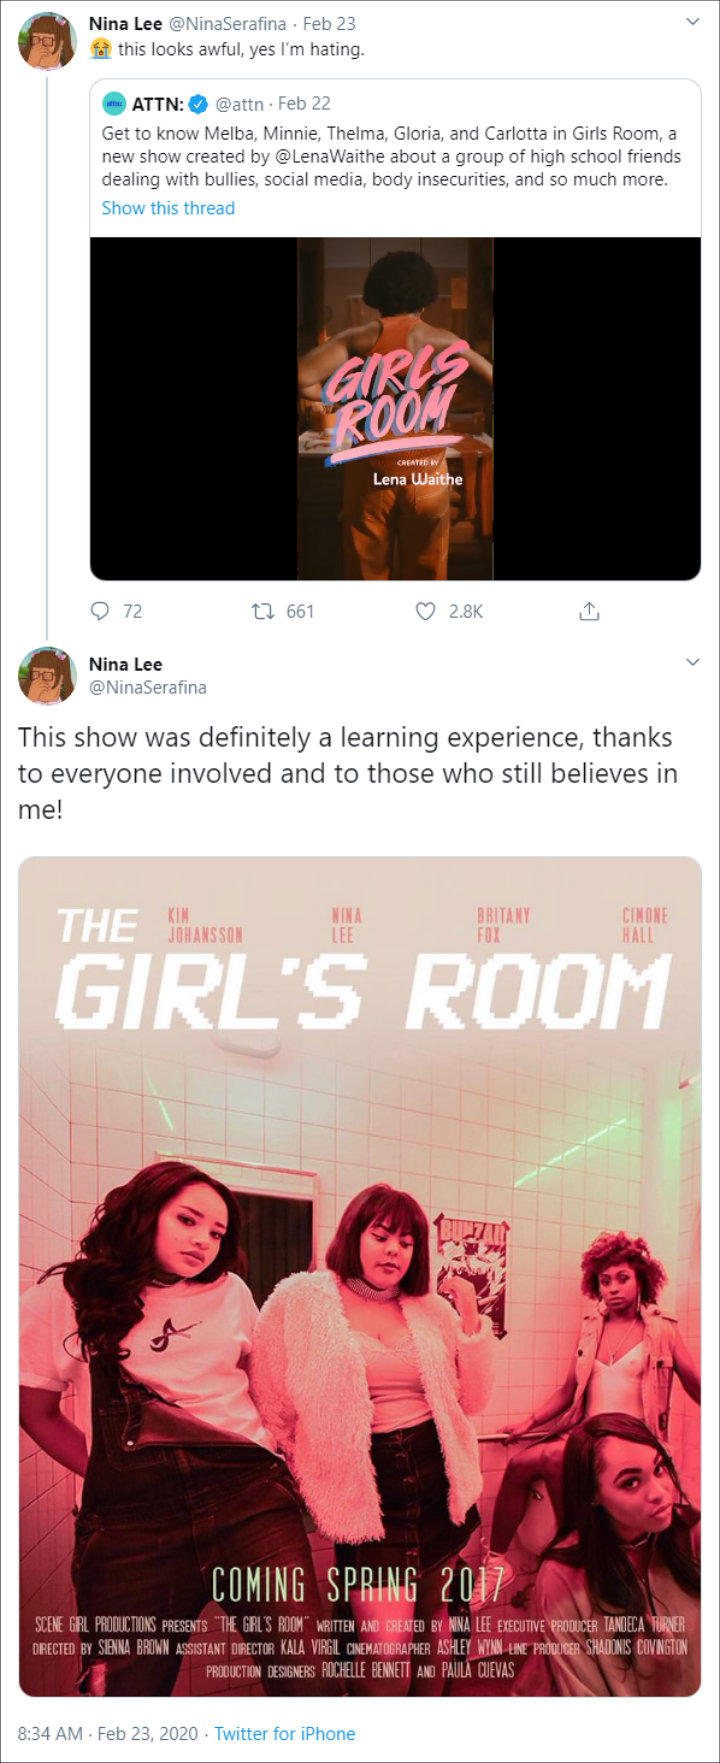 Nina Lee reacted to Lena Waithe's Girls Room